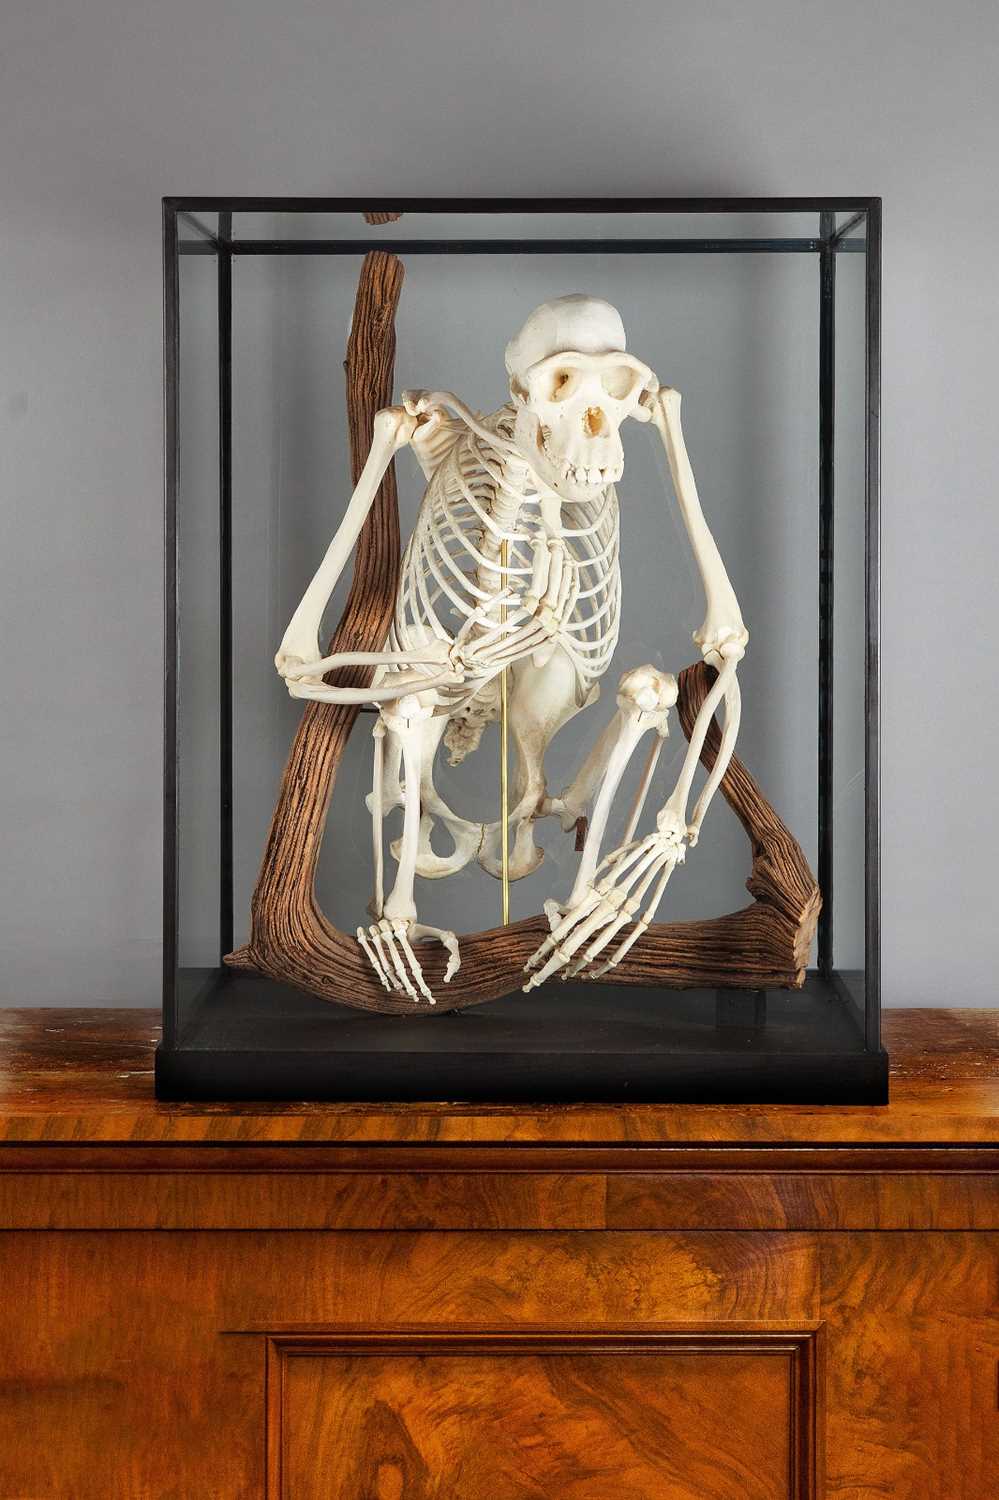 Skeletons/Anatomy: A Rare Cased Chimpanzee Skeleton (Pan troglodytes), captive bred, circa 2010, a